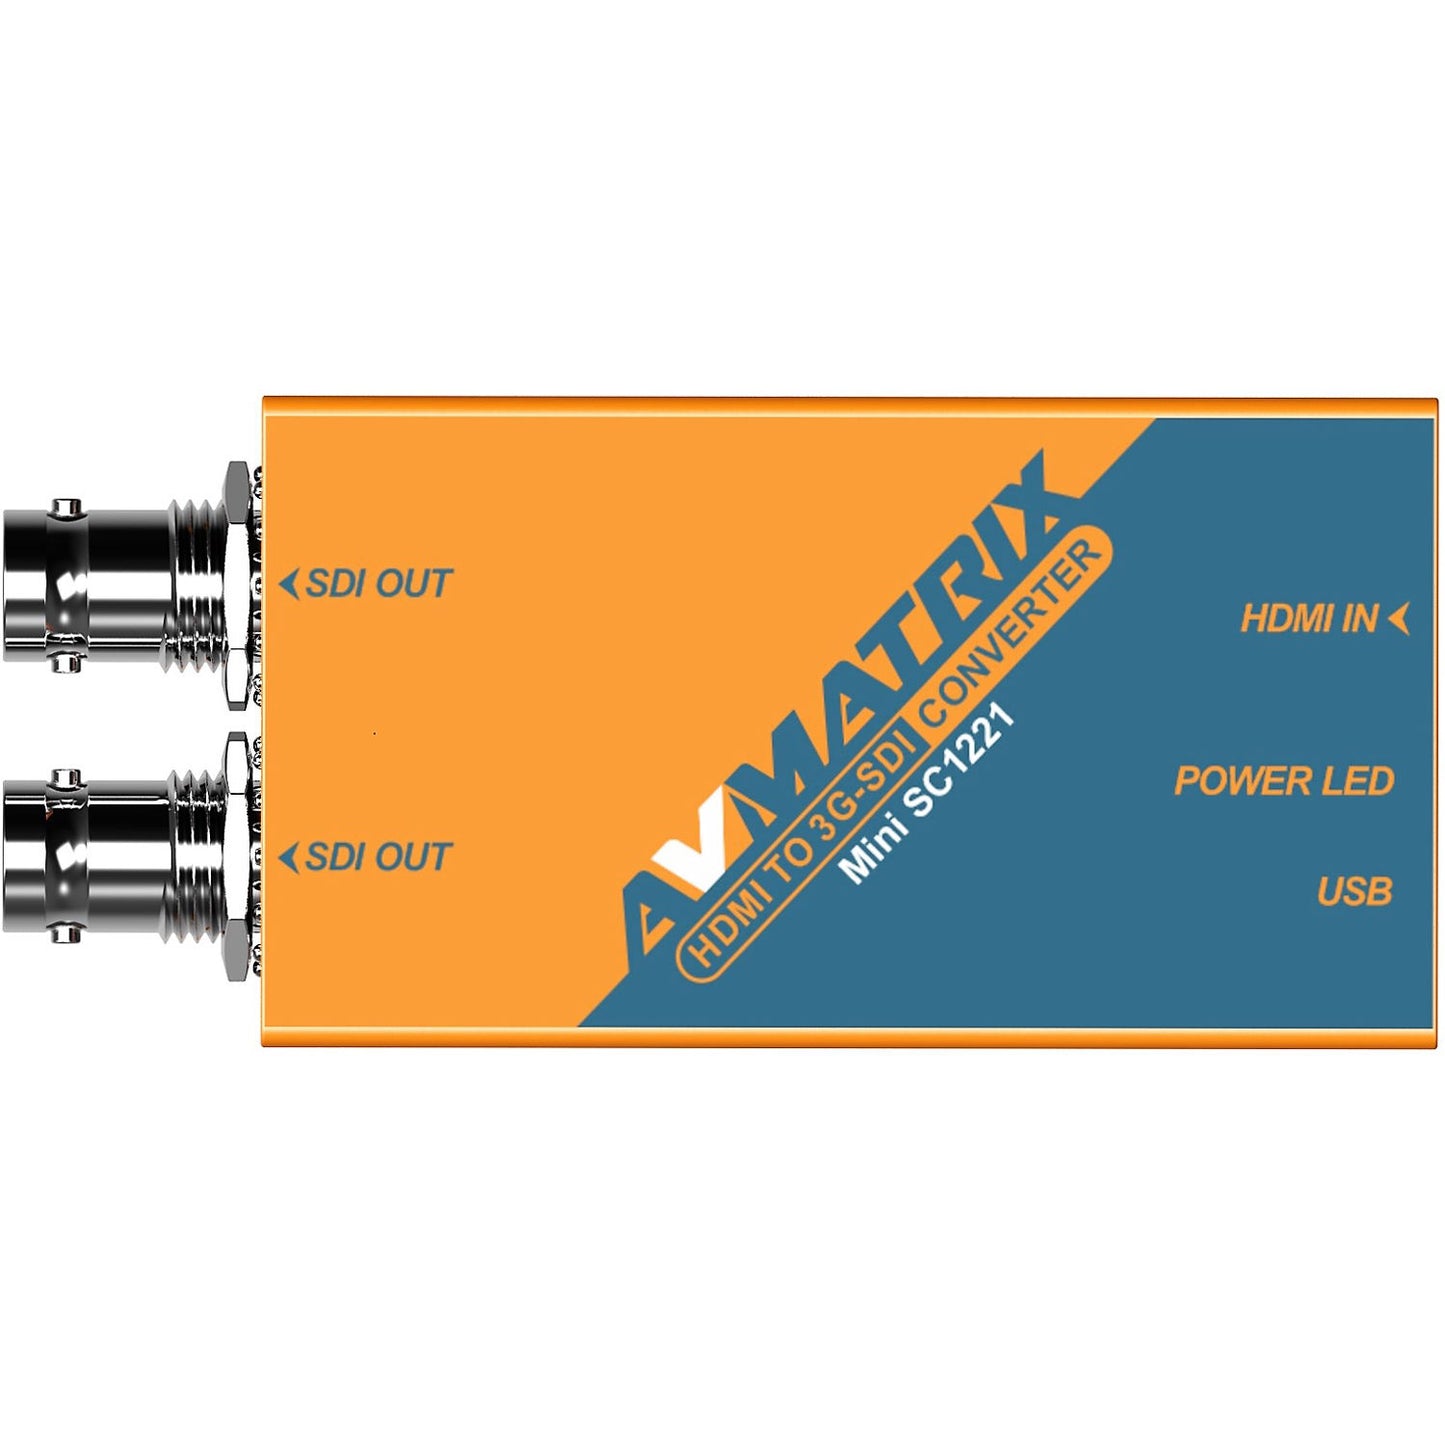 AVMatrix Mini SC1112 3G-SDI to HDMI / Mini SC1221 HDMI to 3G-SDI Pocket-Size Broadcast Converter 1080p60 with AC Power Adapter, LED Power Indicator, Micro USB Port, and Mounting Bracket